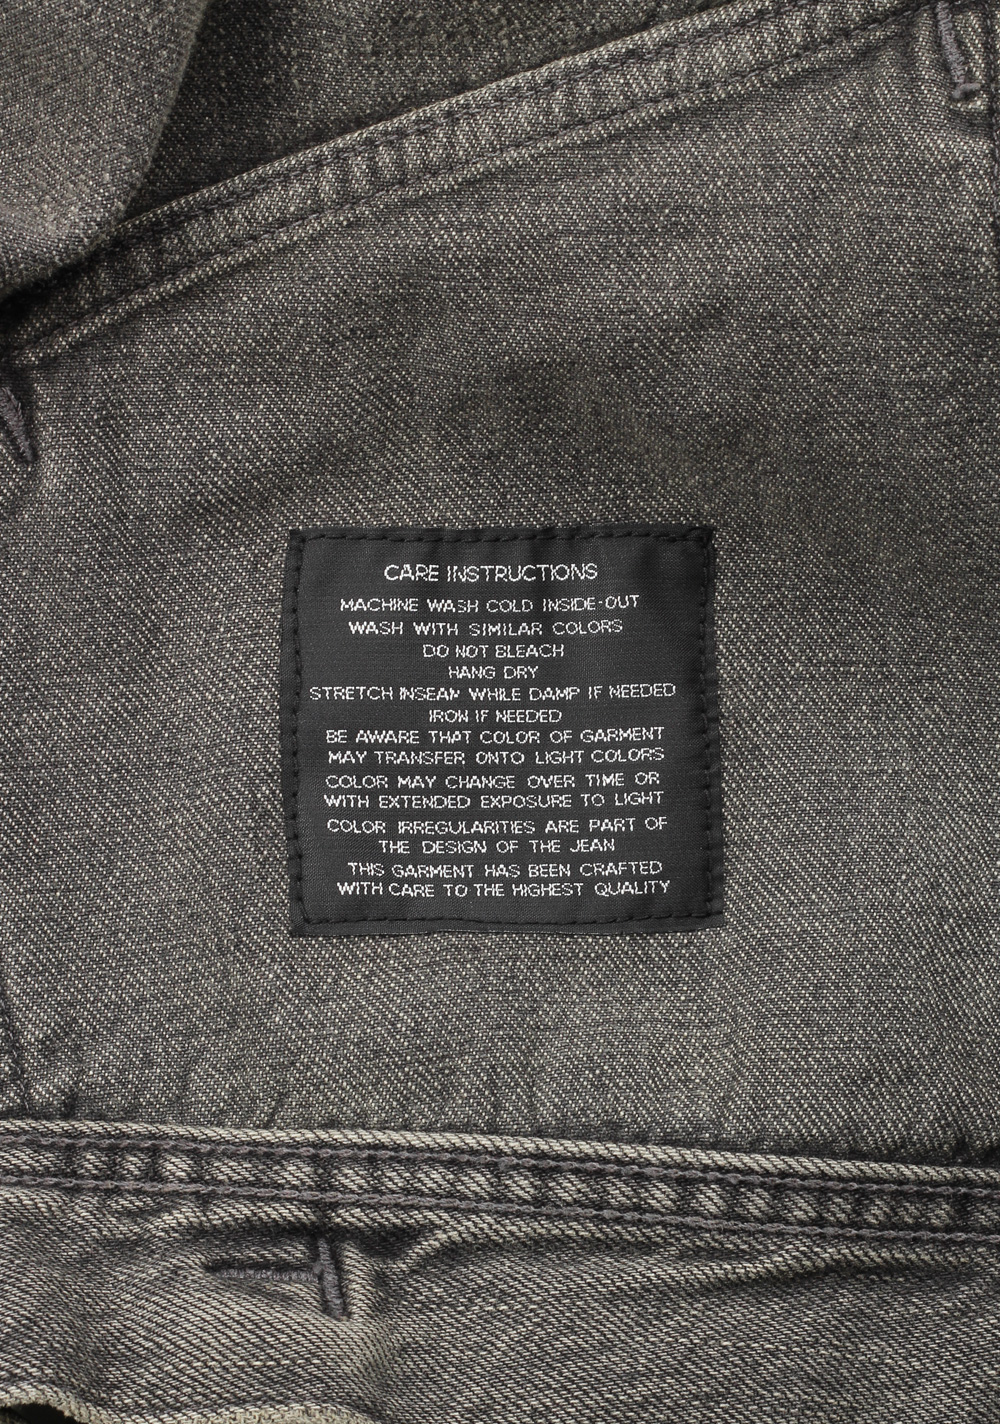 TOM FORD Selvedge Denim Jacket Size Medium / 46 / 36R U.S. in Cotton | Costume Limité